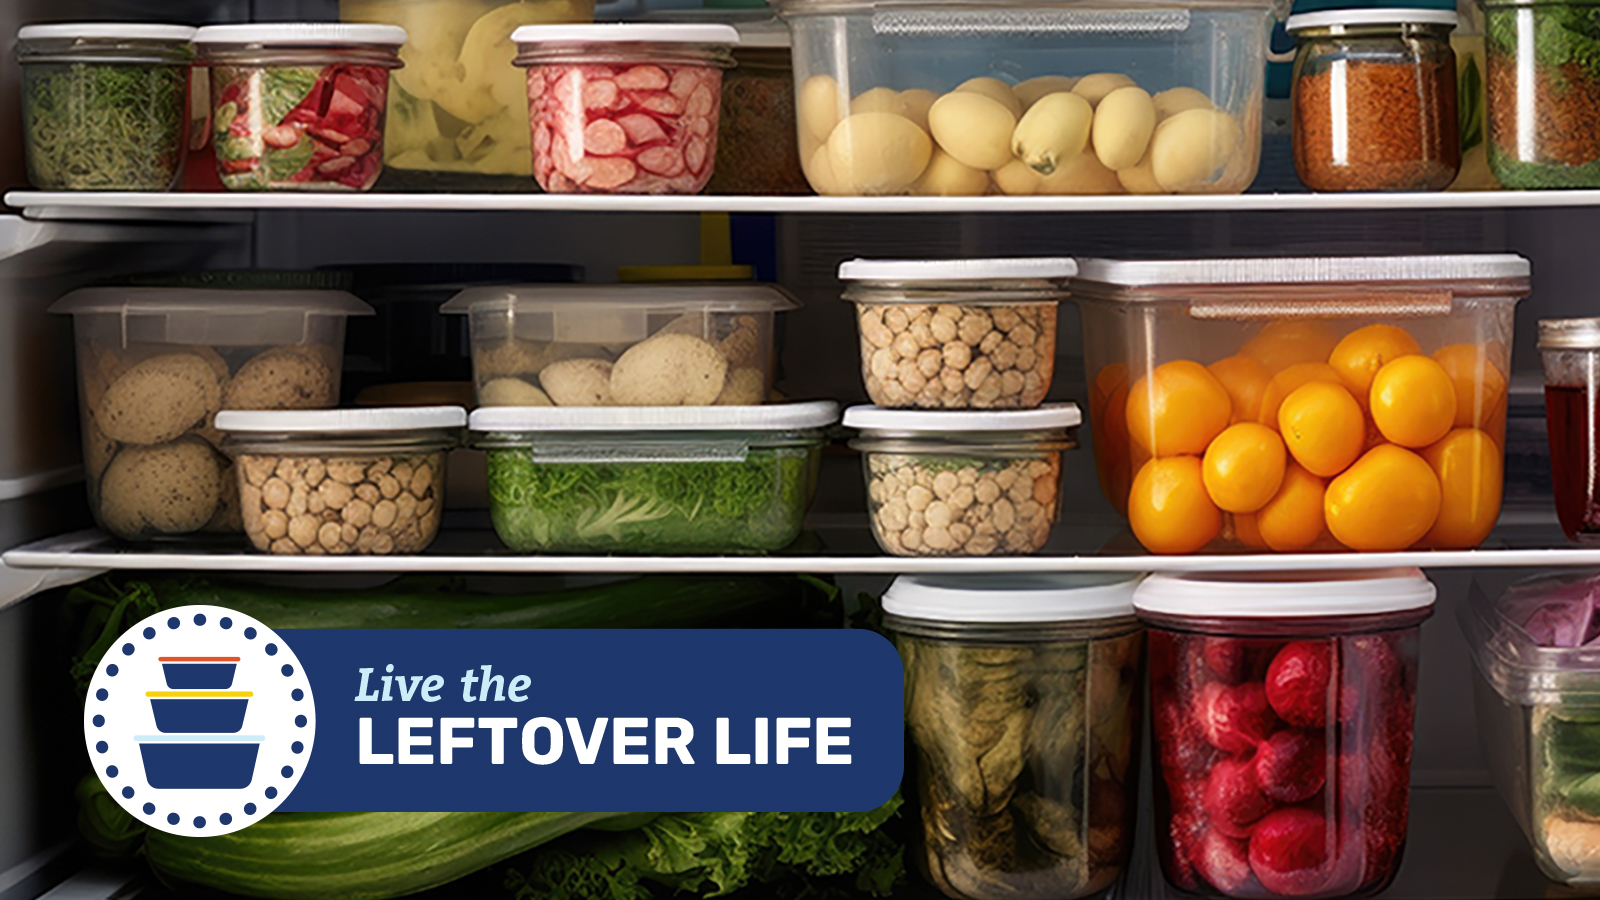 Live the Leftover Life - food storage contains on a refrigerator shelf